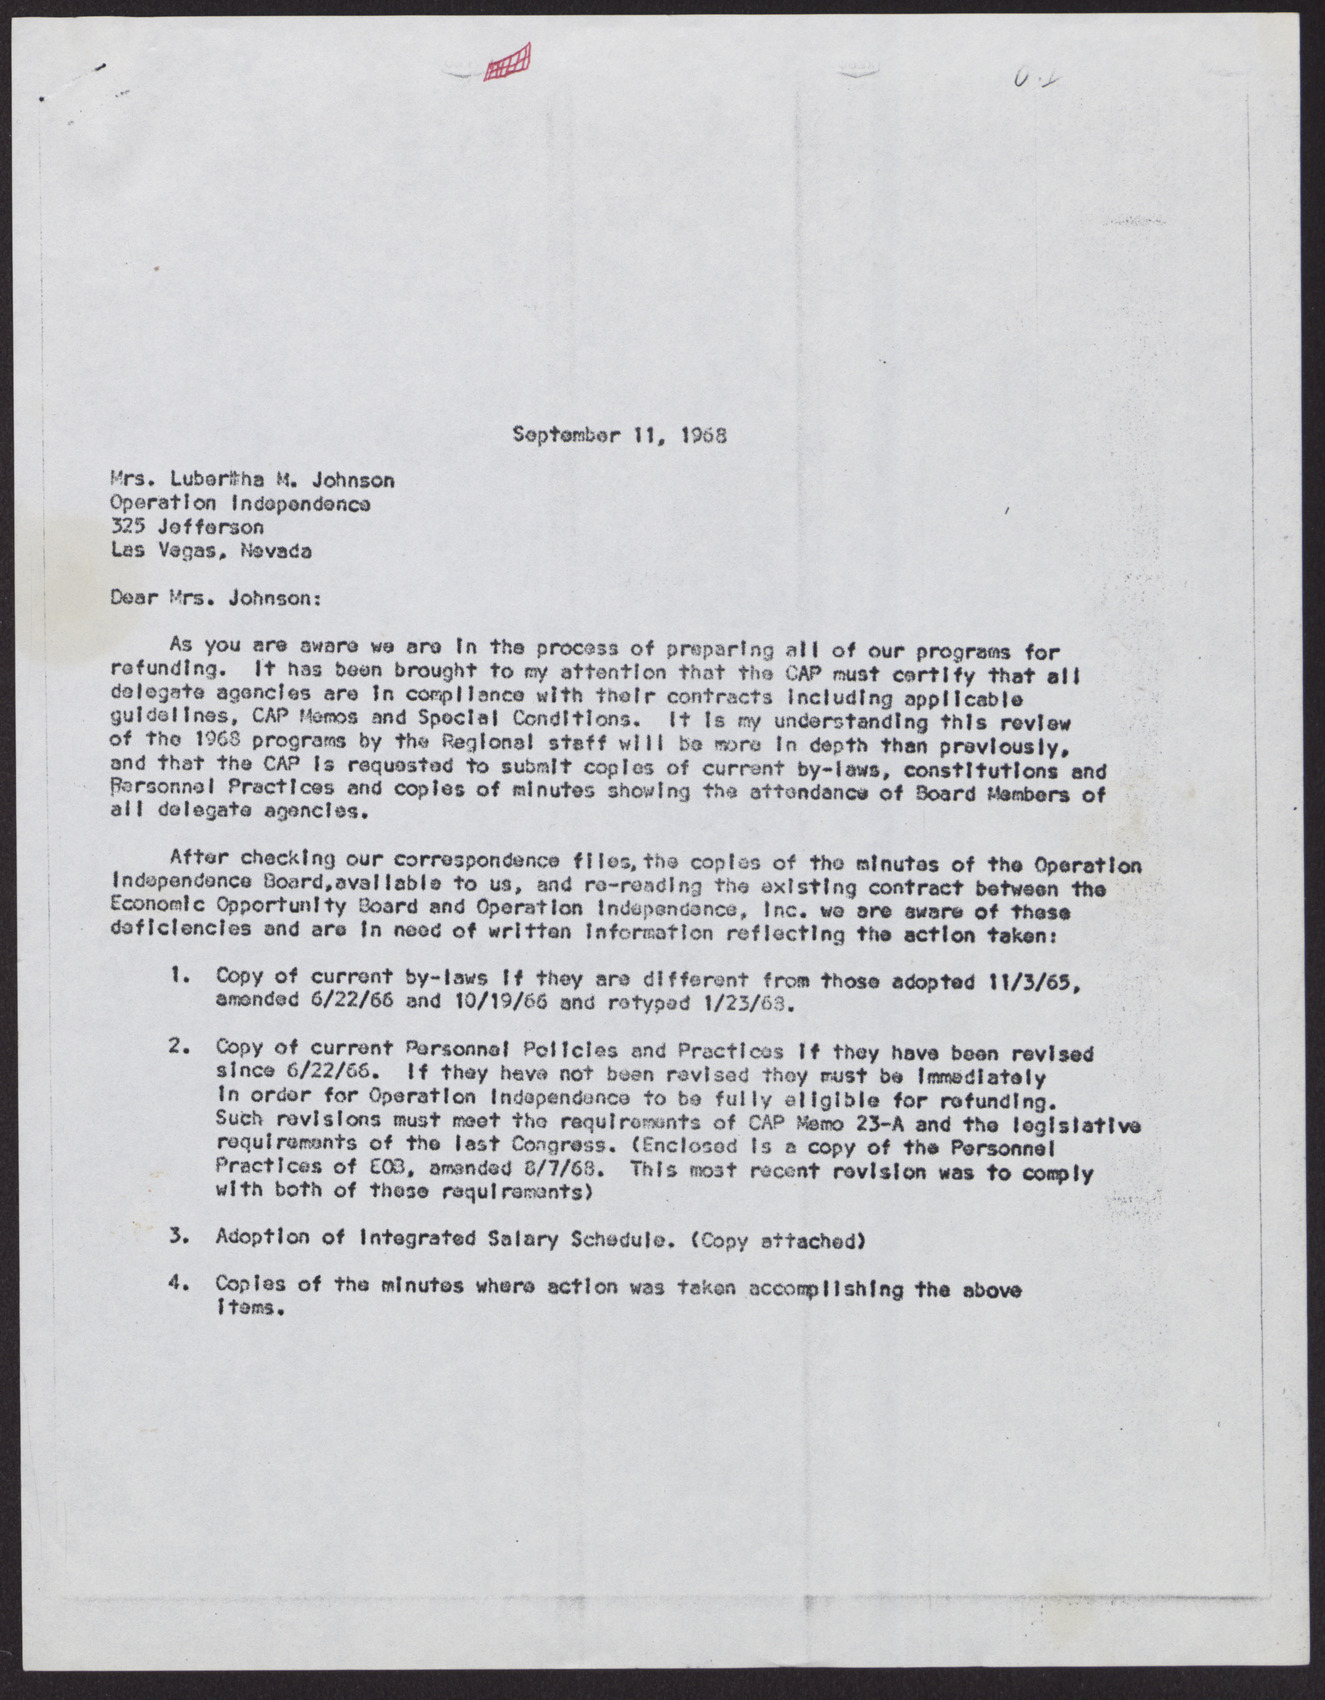 Letter to Mrs. Lubertha M. Johnson from J. David Hoggard (2 pages), September 11, 1968